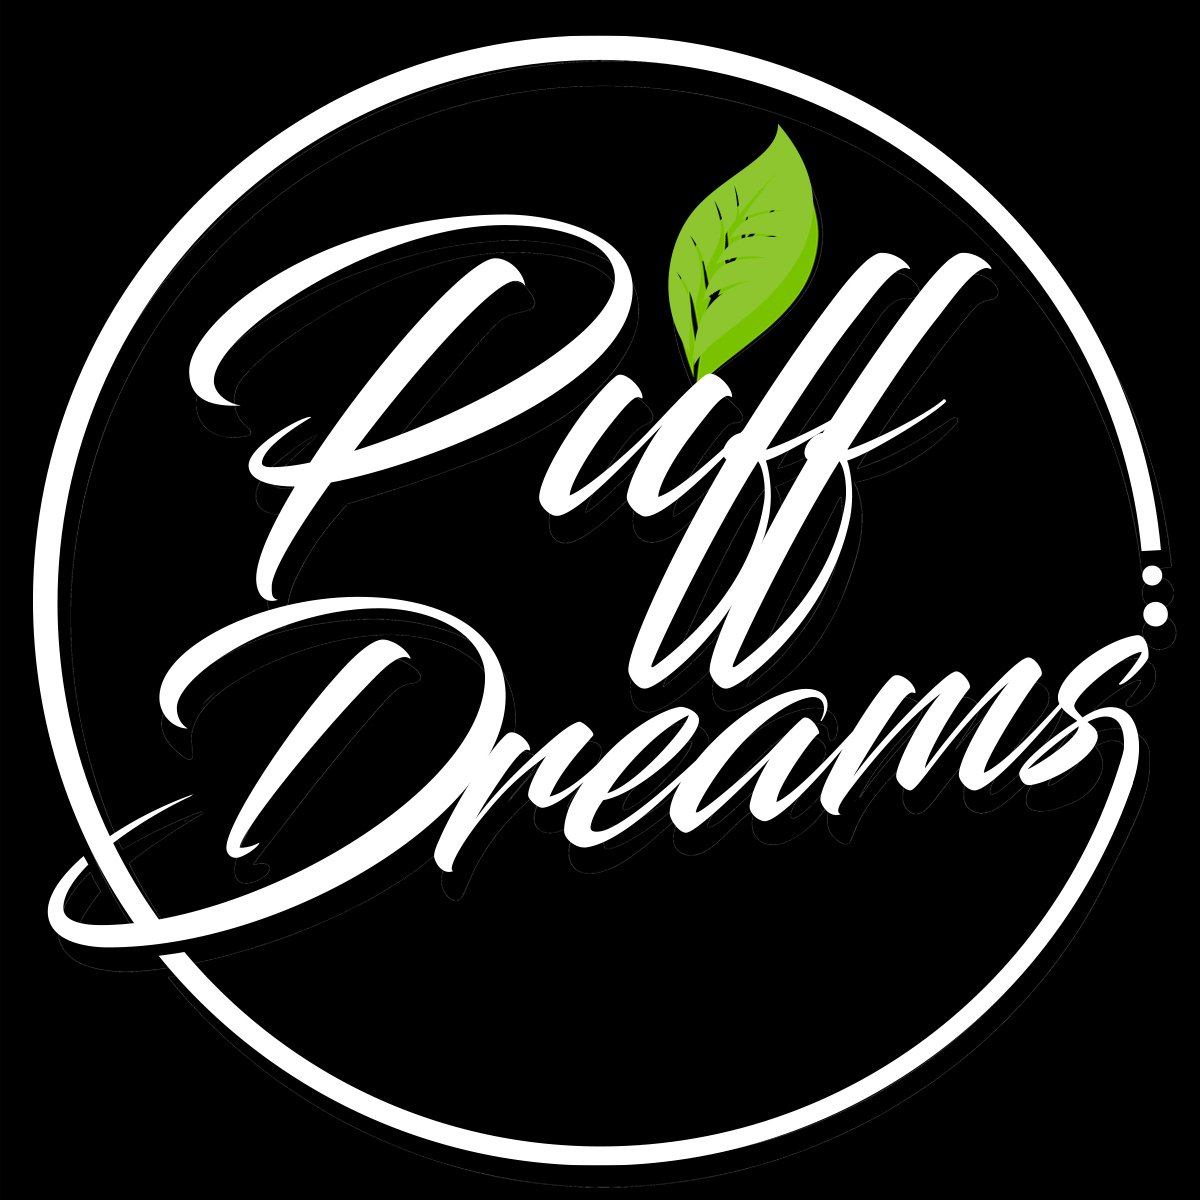 Puff Dreams logo